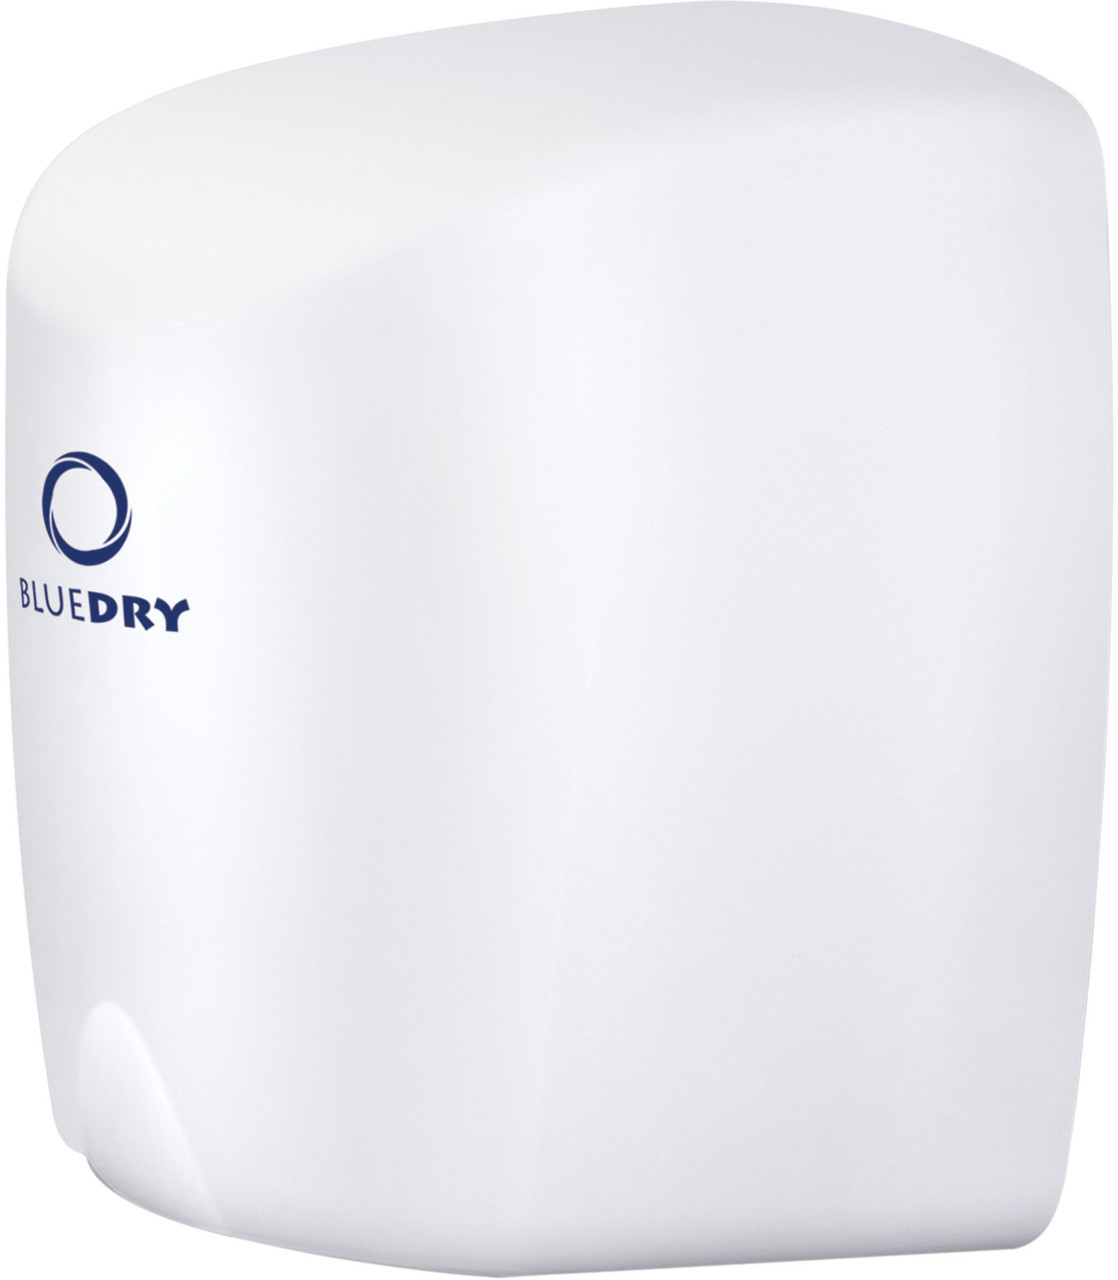 HD-BD1015W - BlueDry Mini Jet Hand Dryer - White